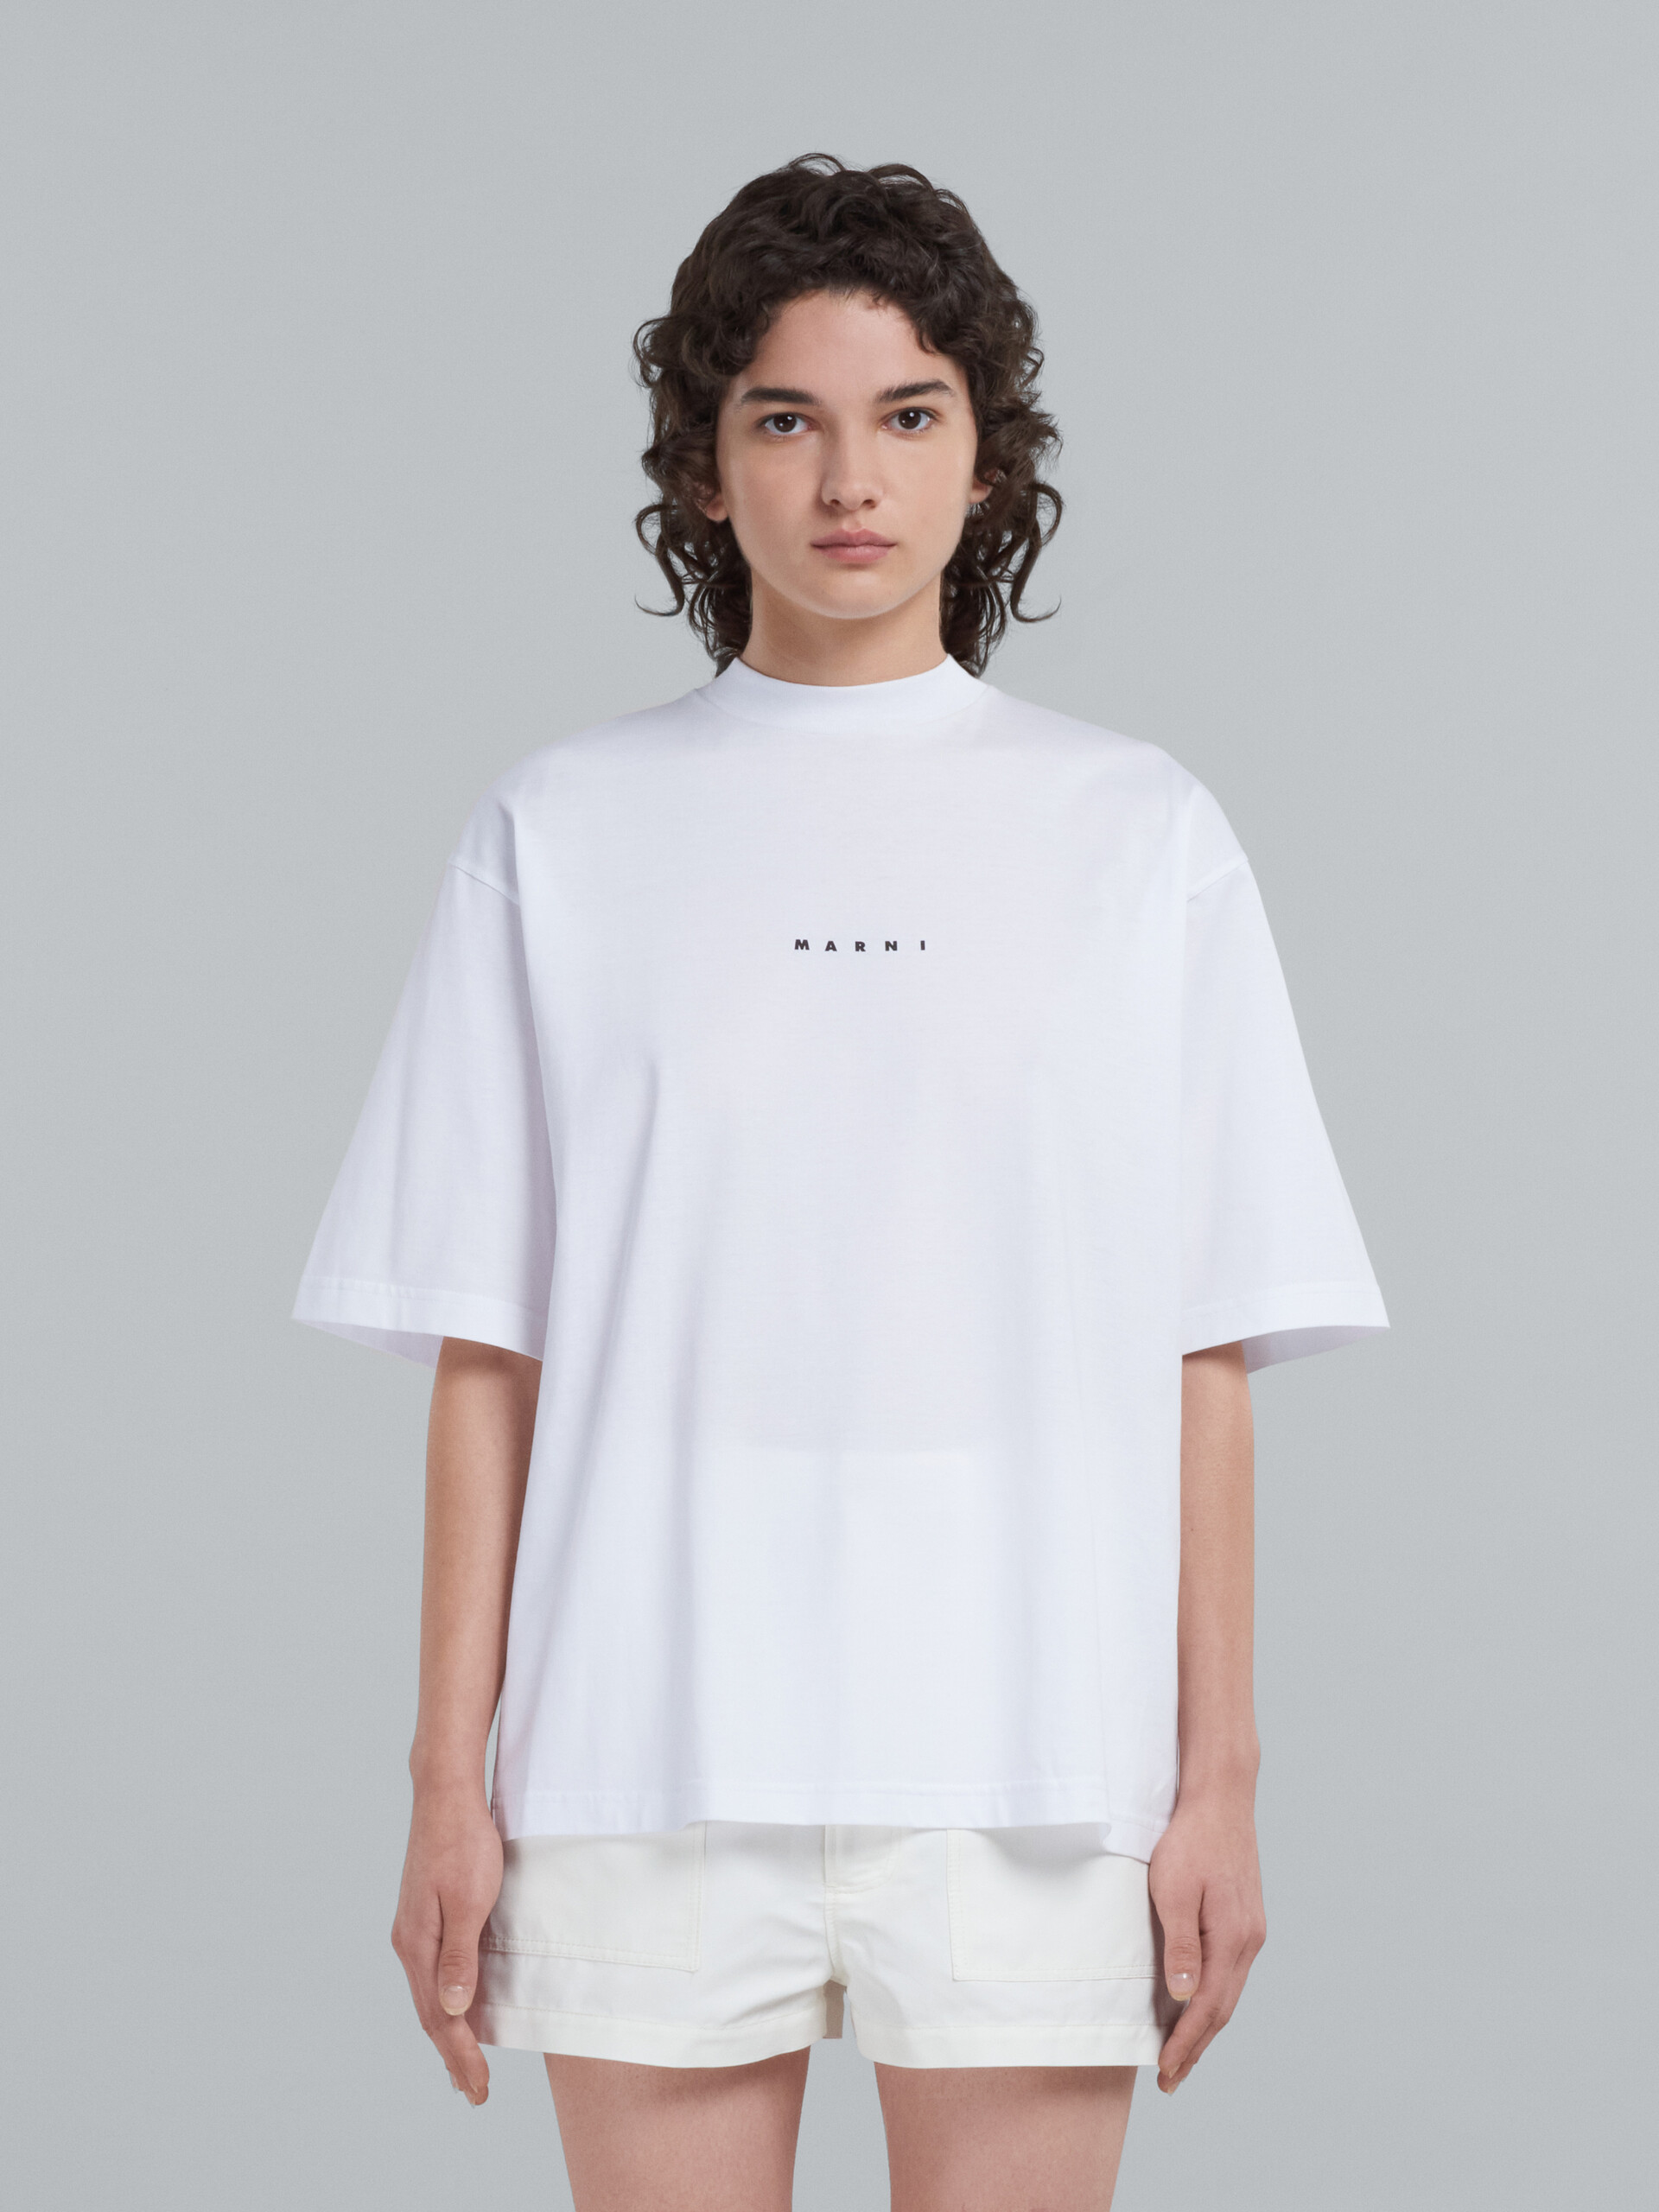 Weißes T-Shirt mit Logo - T-shirts - Image 2